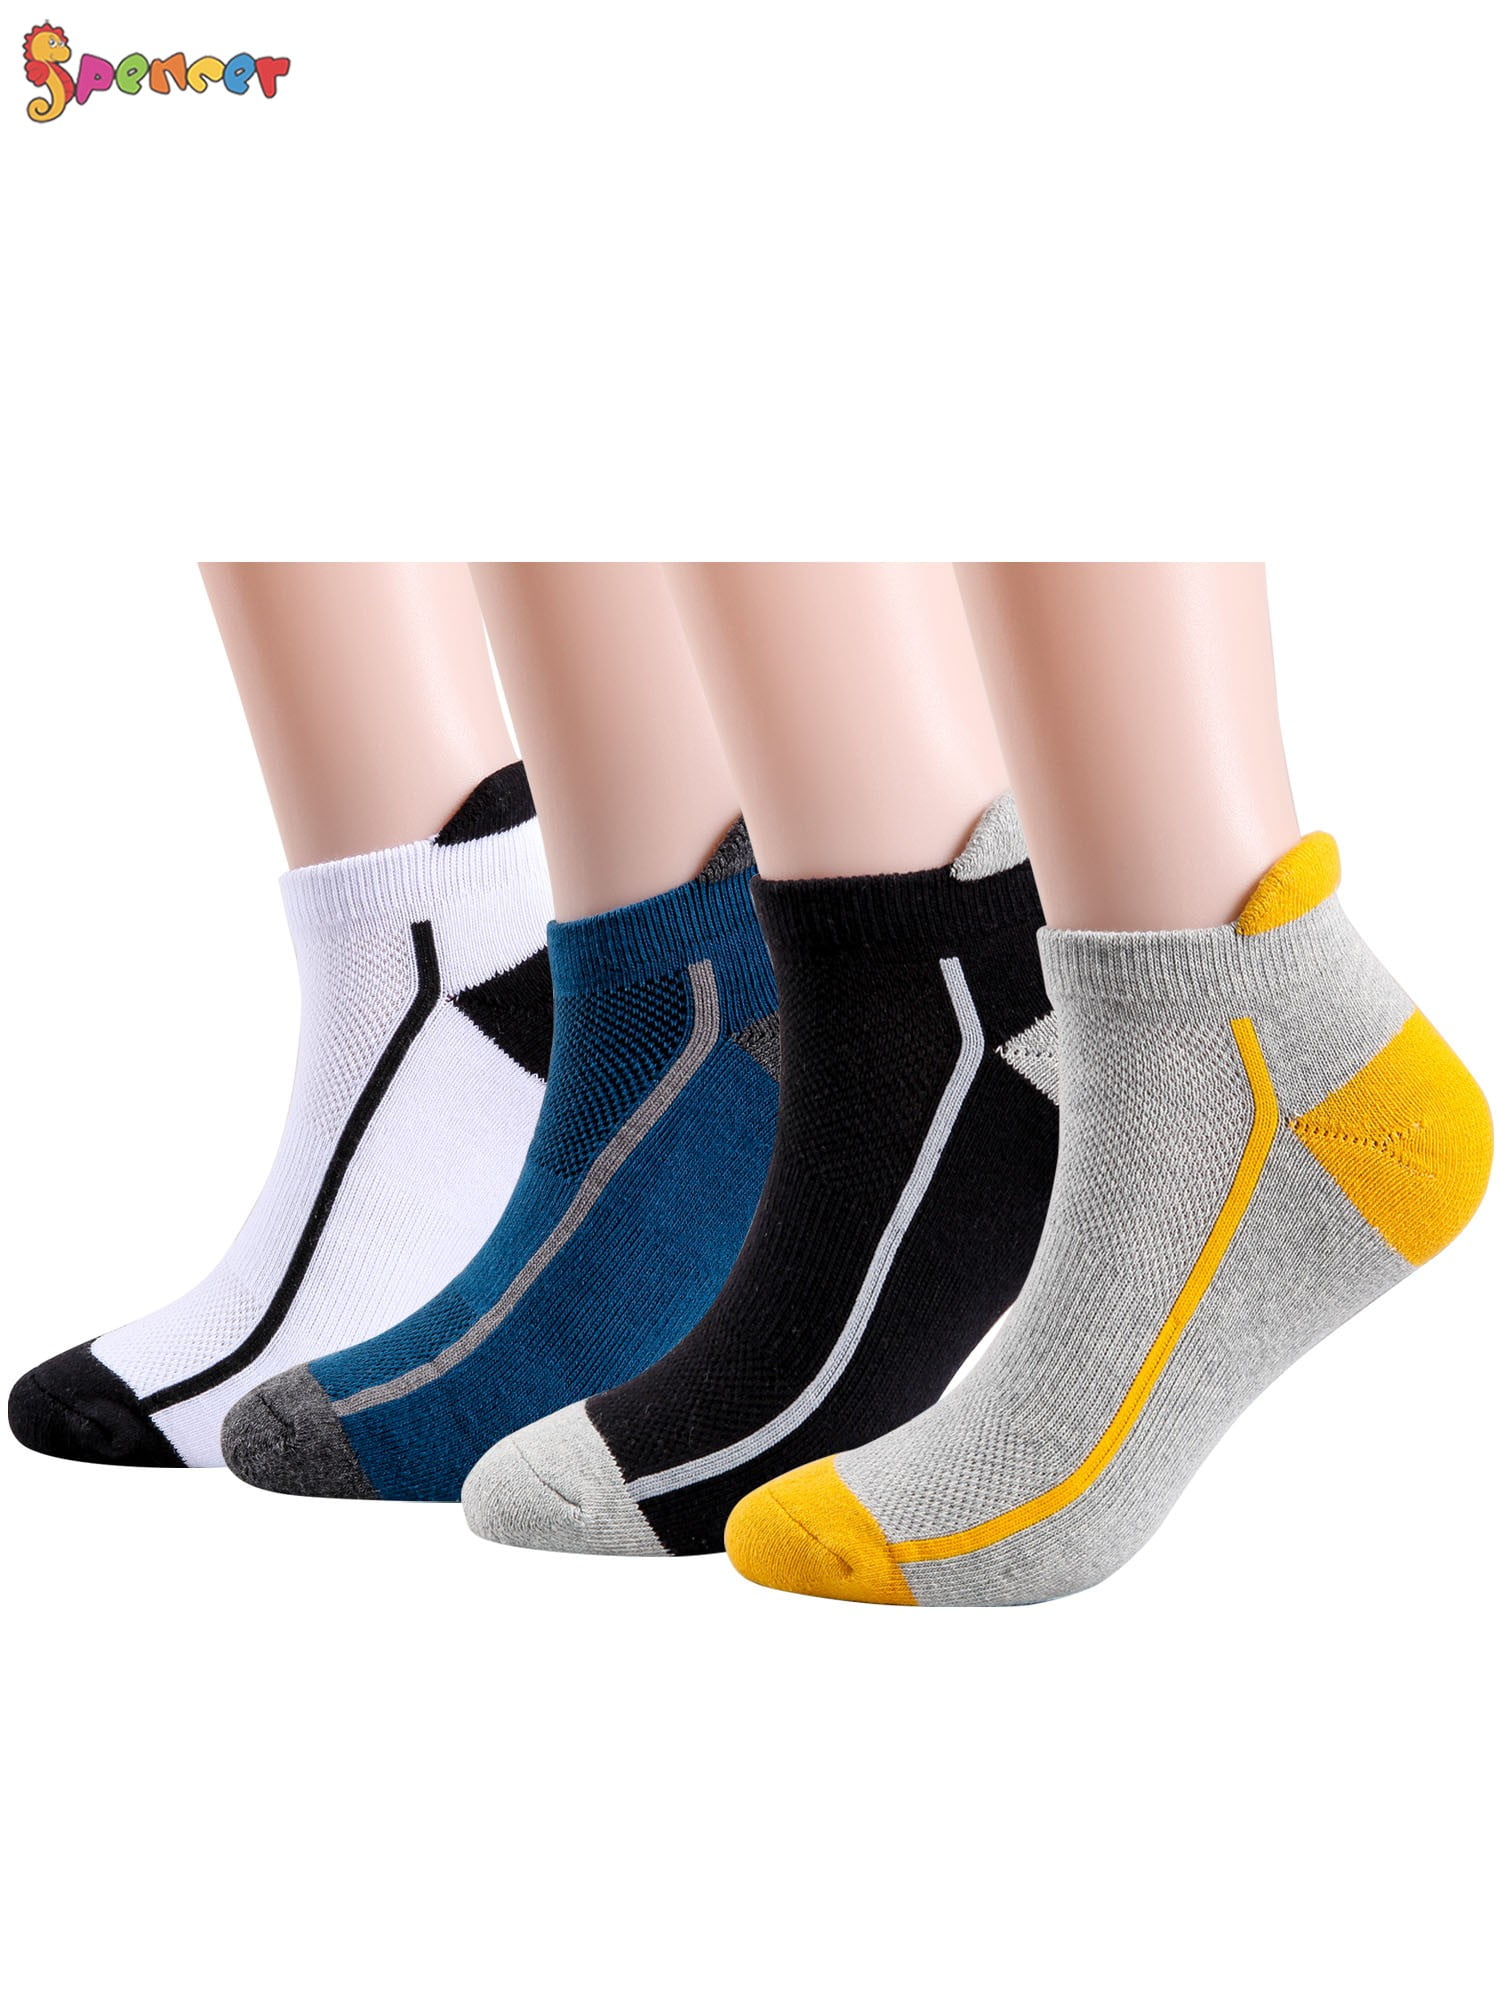 Women Men's Ankle Socks Low Cut Crew Casual Sport Color Cotton Socks 5 Pair Sock